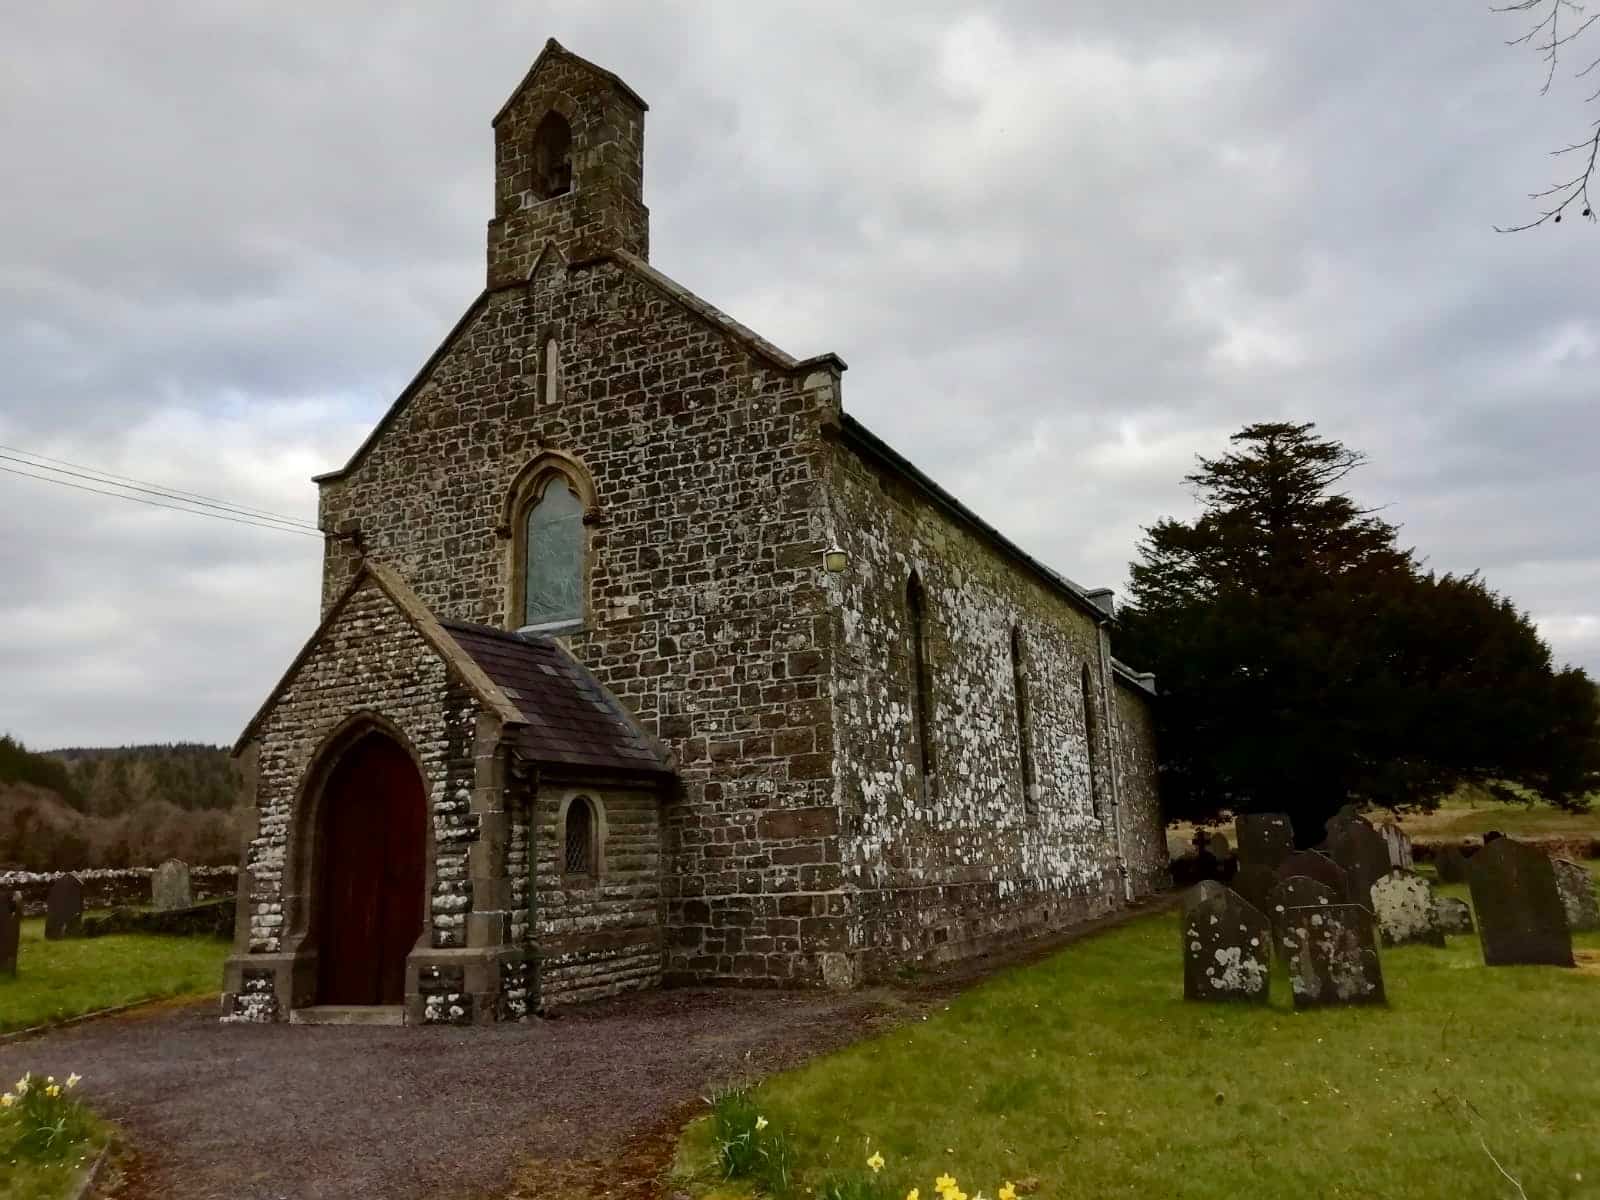 Stone church in Wales